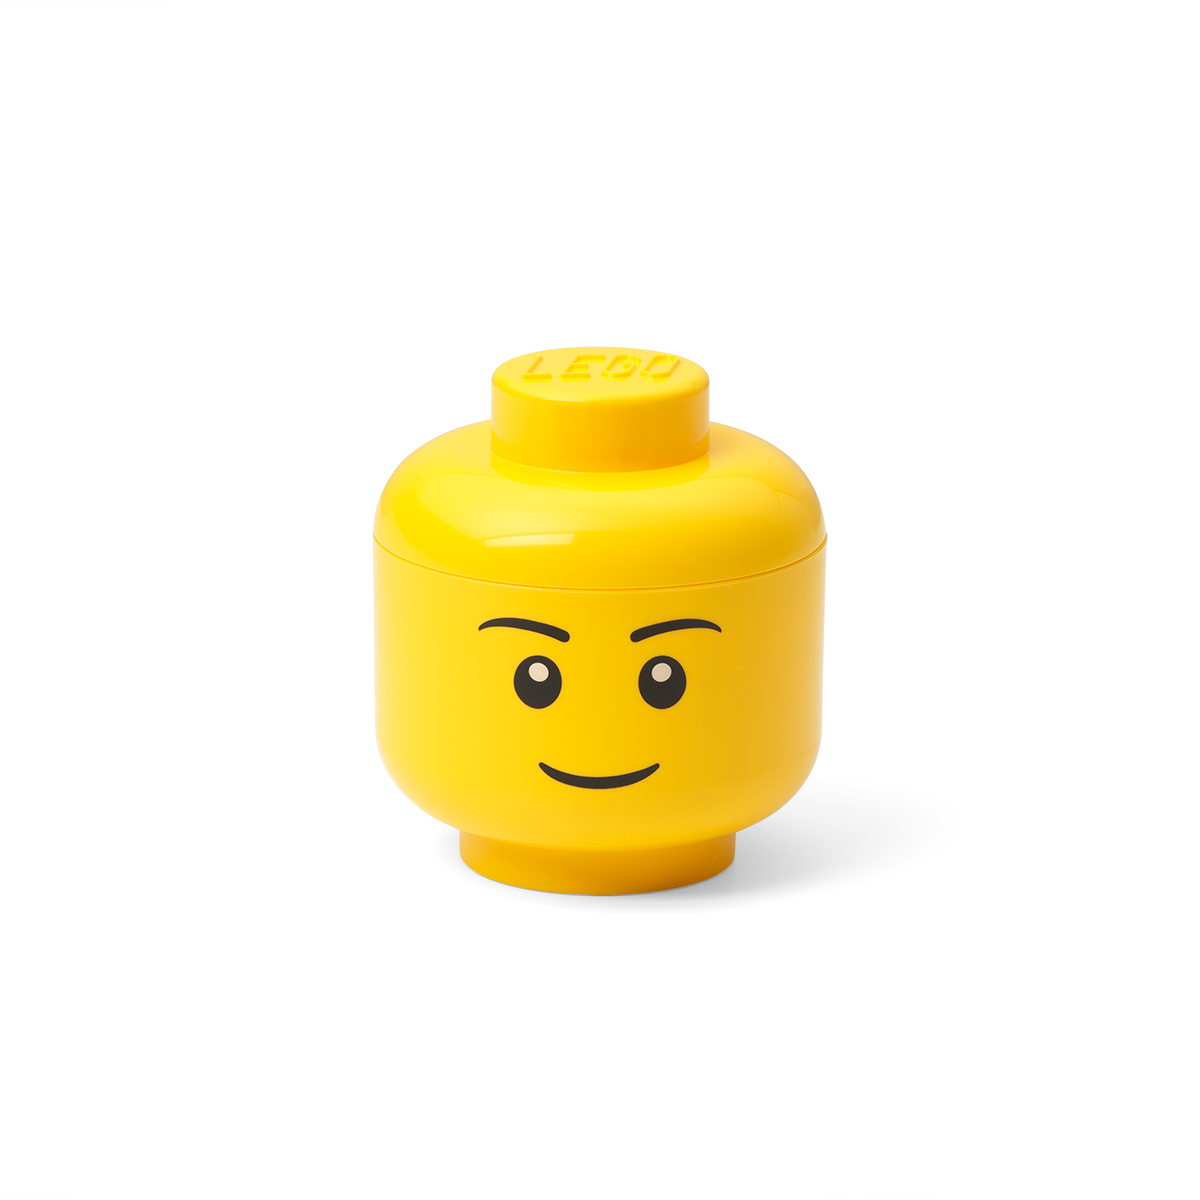 Mini LEGO Boy Storage Head